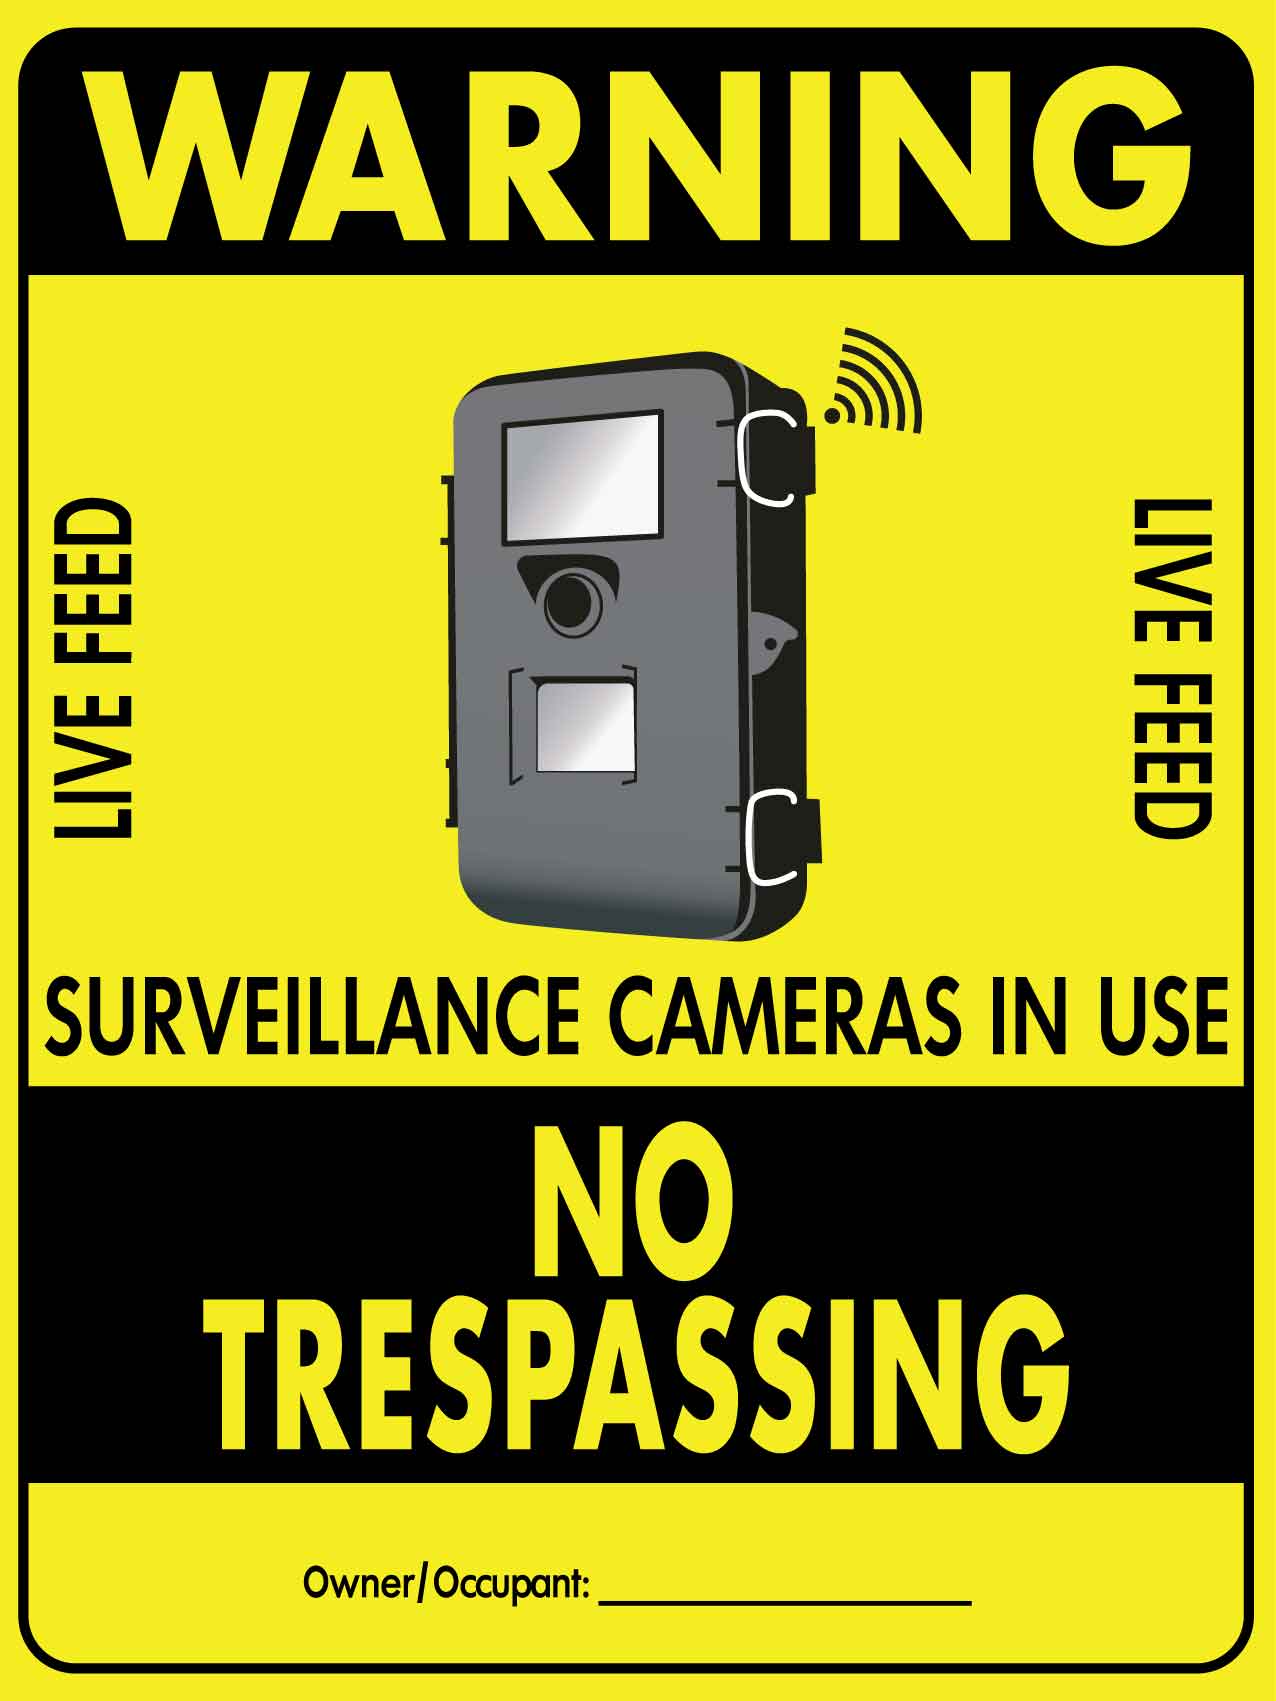 Warning Trail Surveillance Cameras in Use No Trespassing Sign